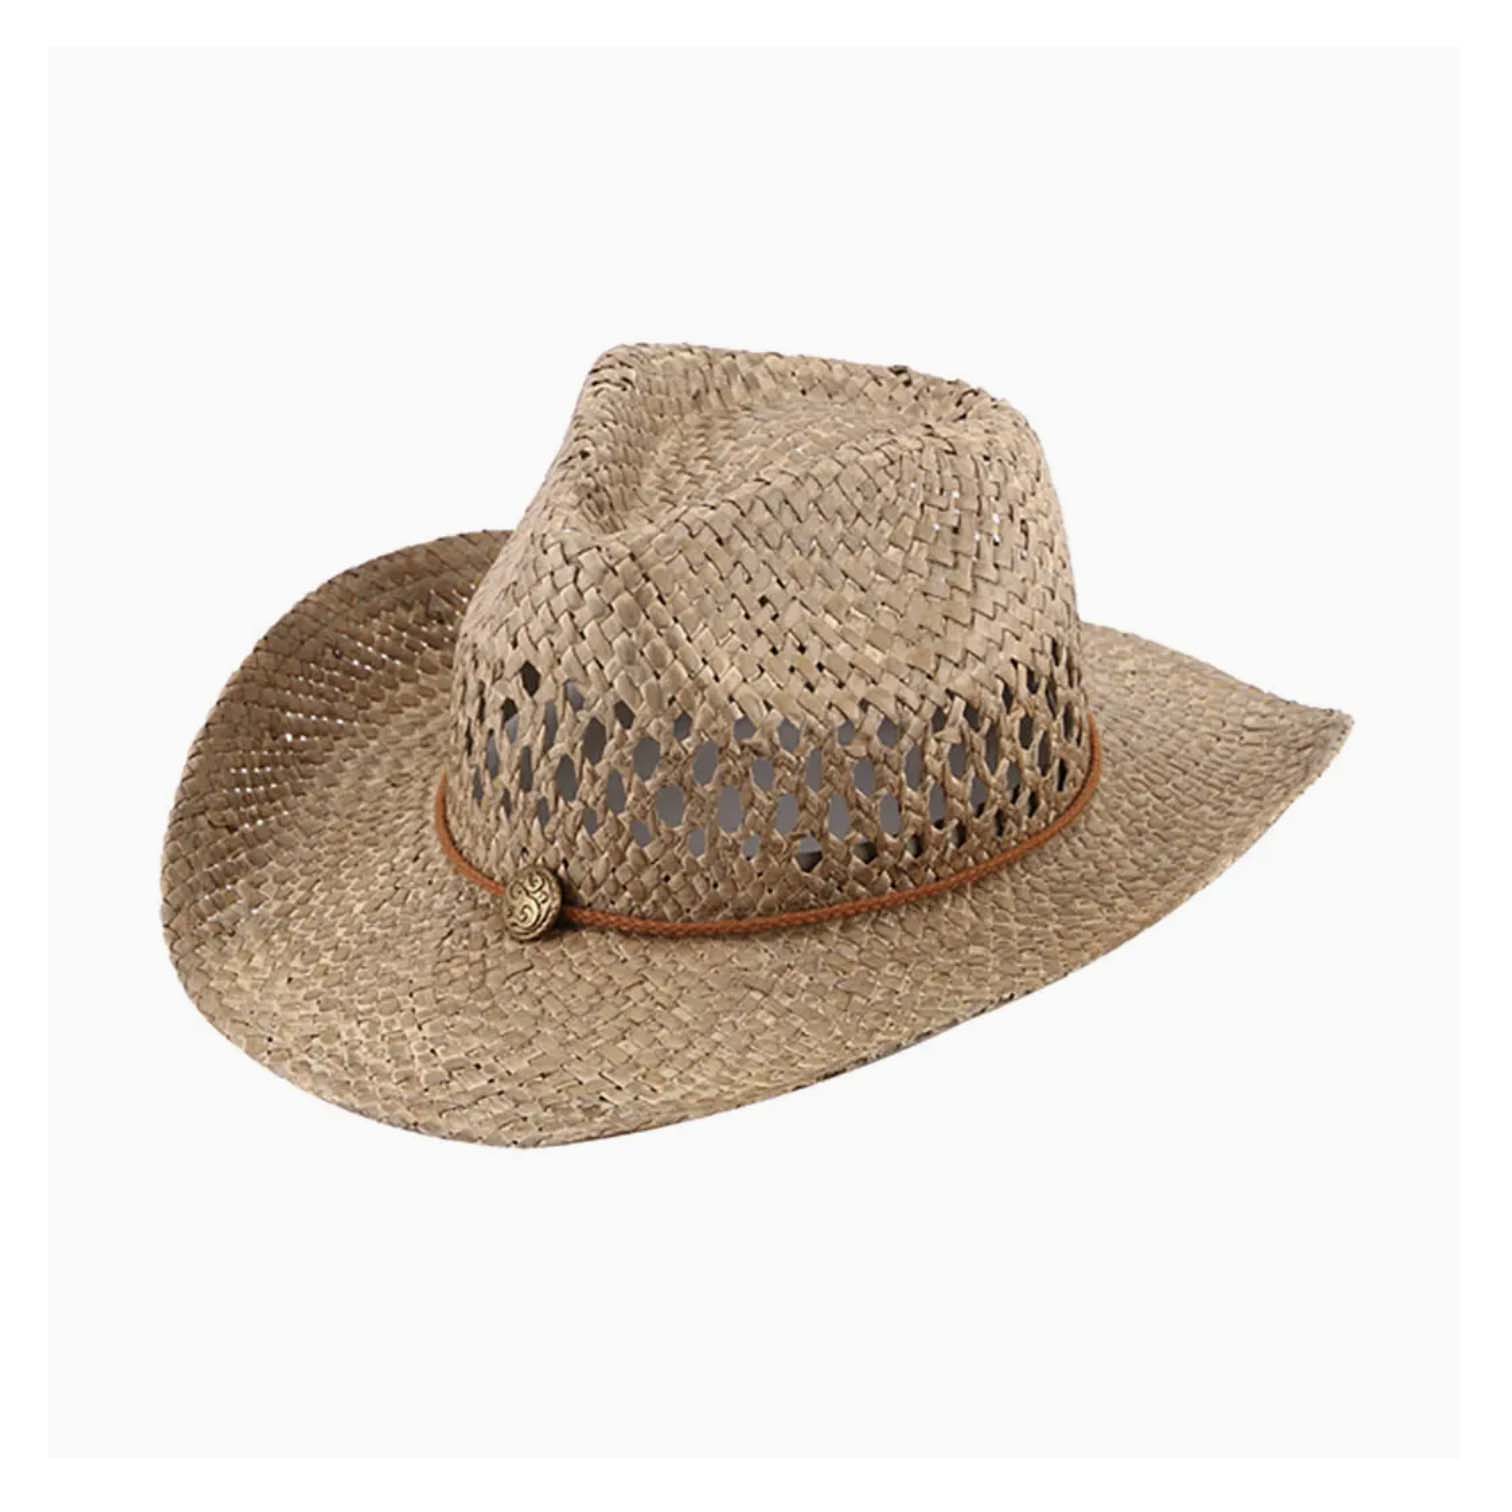 Embellish Your Life Medallion Straw Cowboy Hat